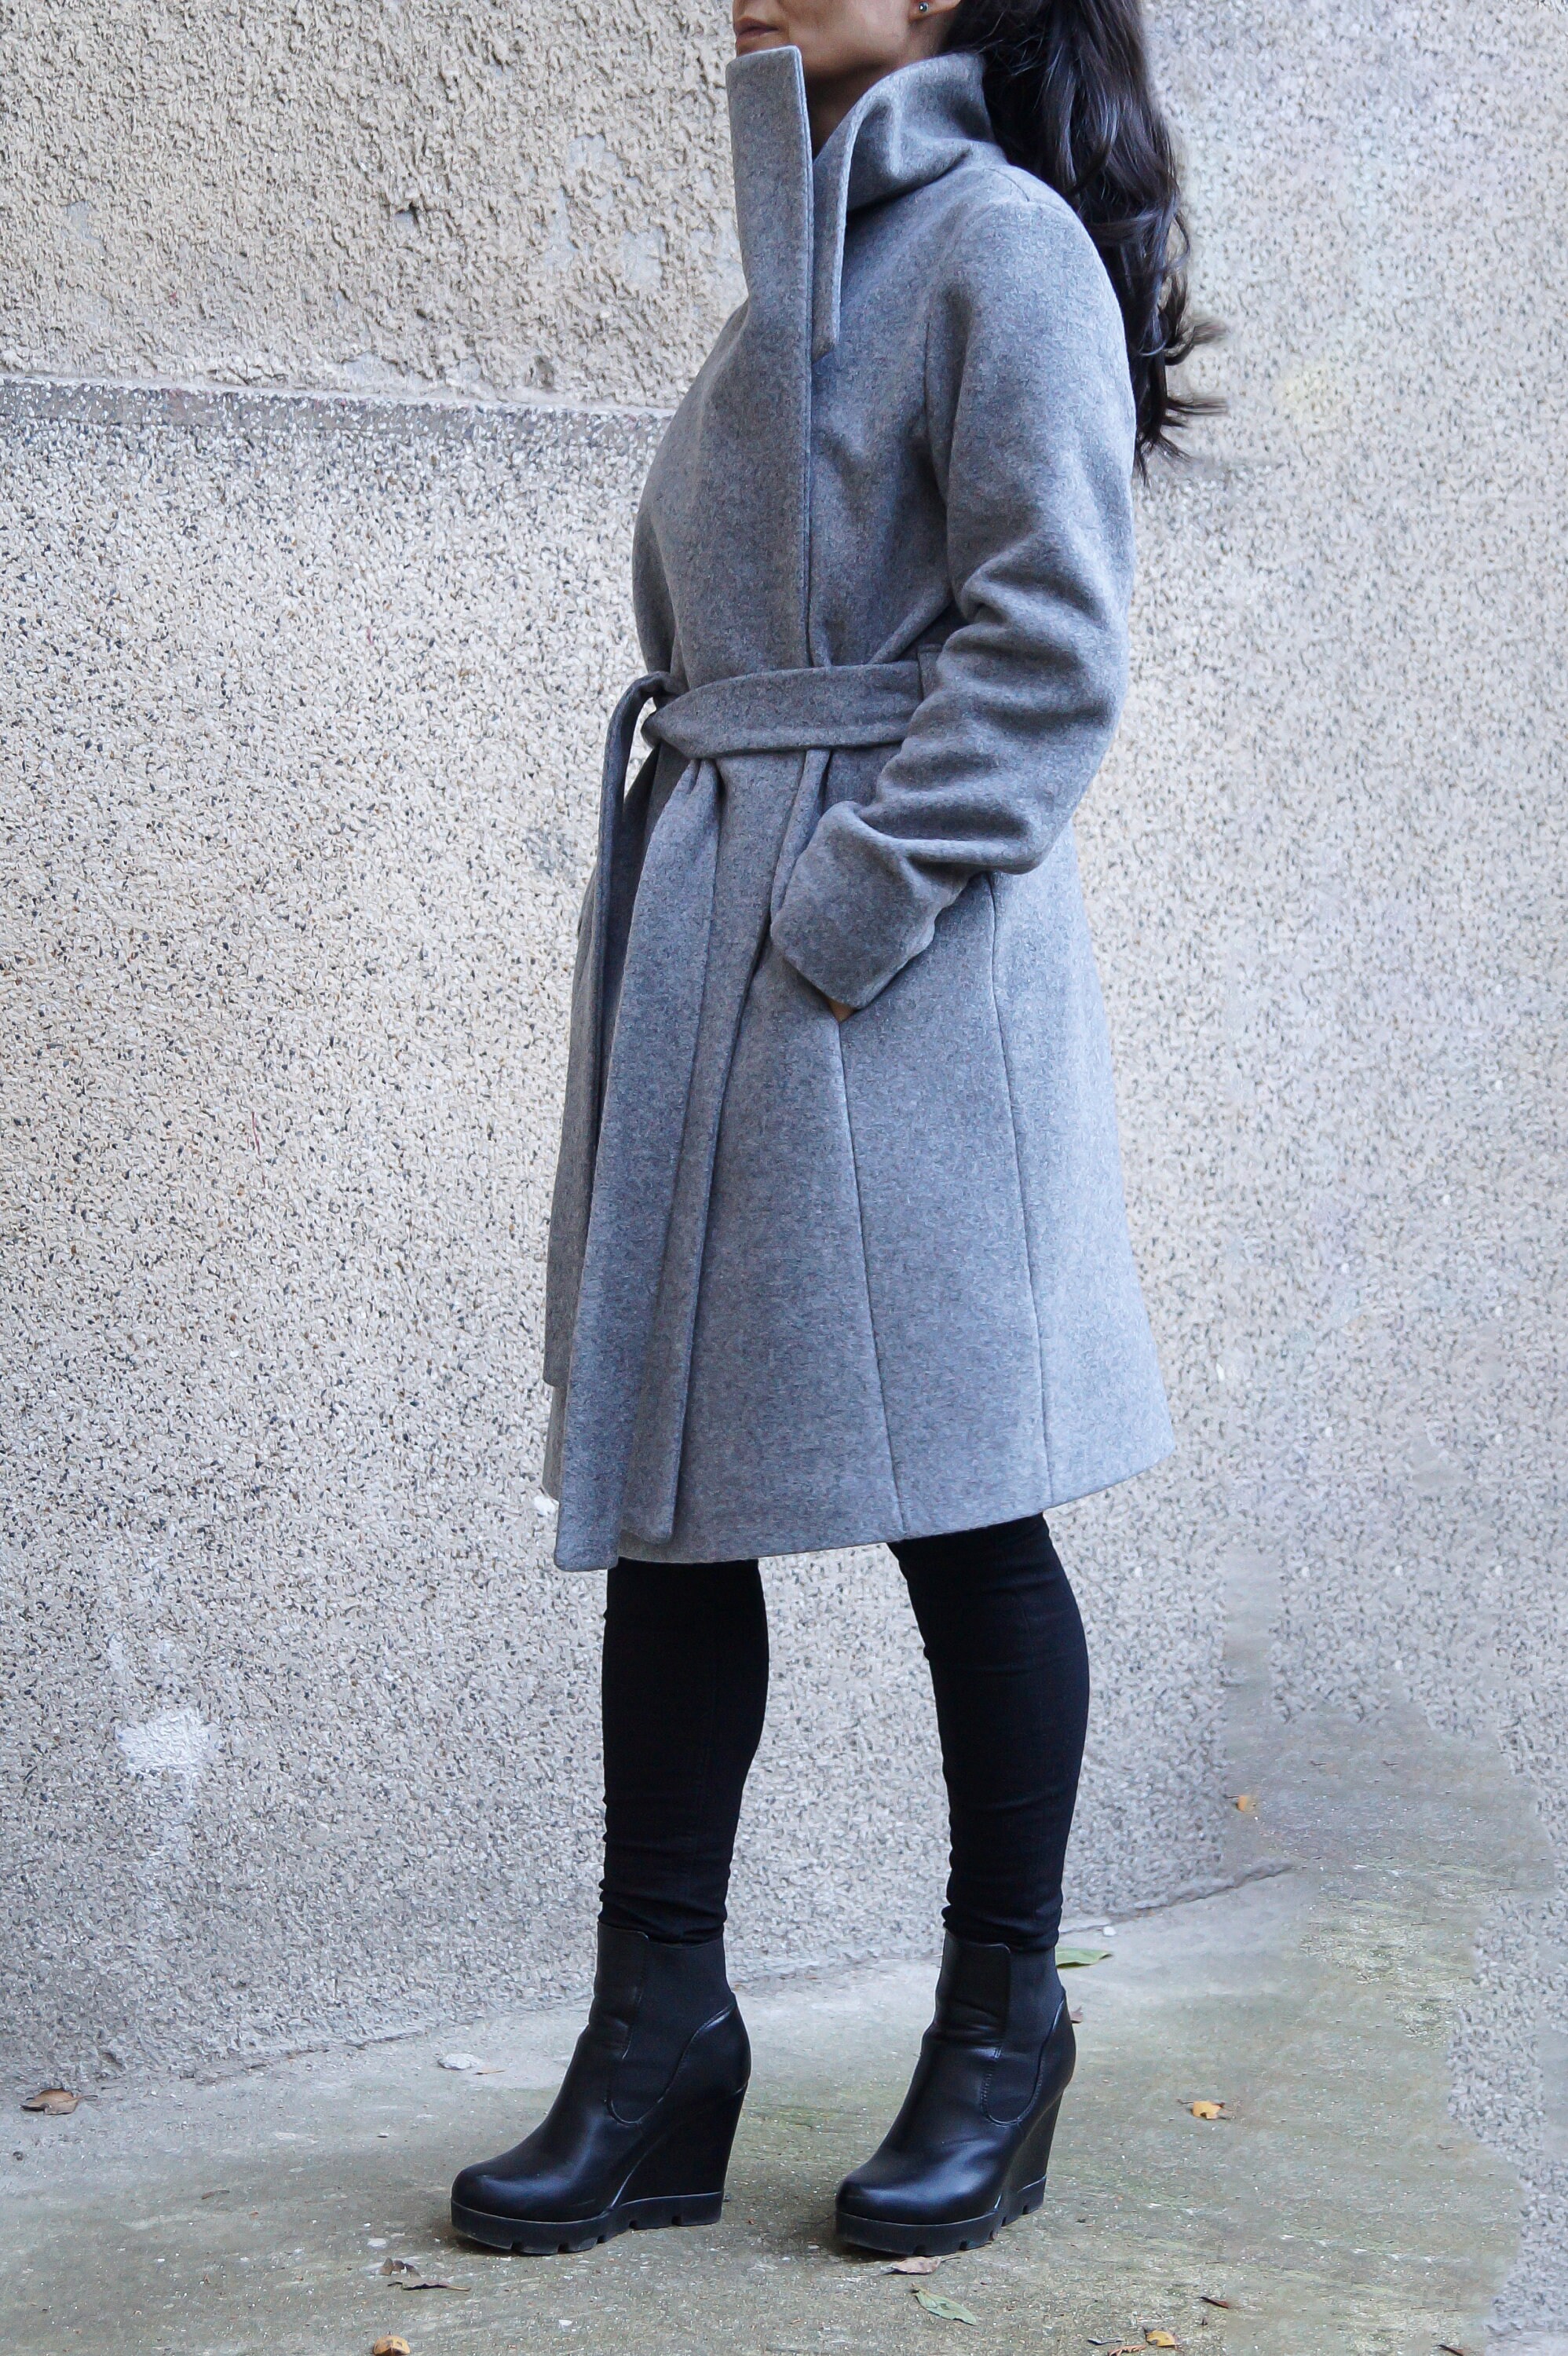 Vêtements Vêtements femme Vestes et manteaux Grey Lined Coat/Cashmere Wool Coat/Winter Coat/Belted Coat/XXL Coat/Masculine Coat/Symmetrical Coat/Autumn Winter Coat/Warm Coat/F1661 